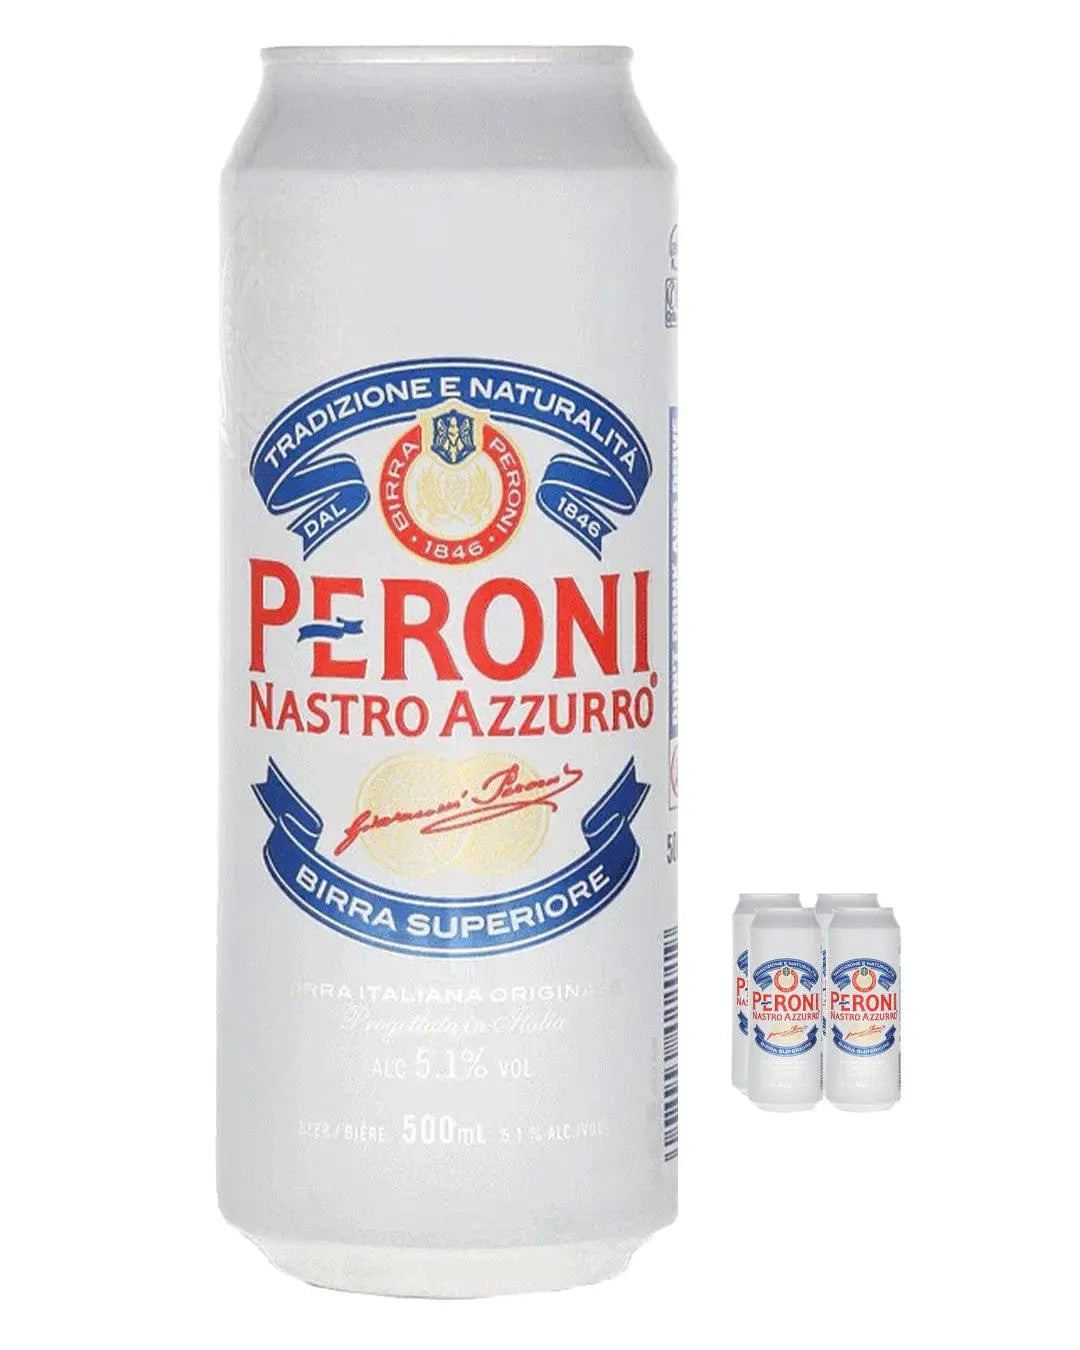 Peroni Nastro Azzurro Premium Lager Cans Multipack, 4 x 500 ml Beer